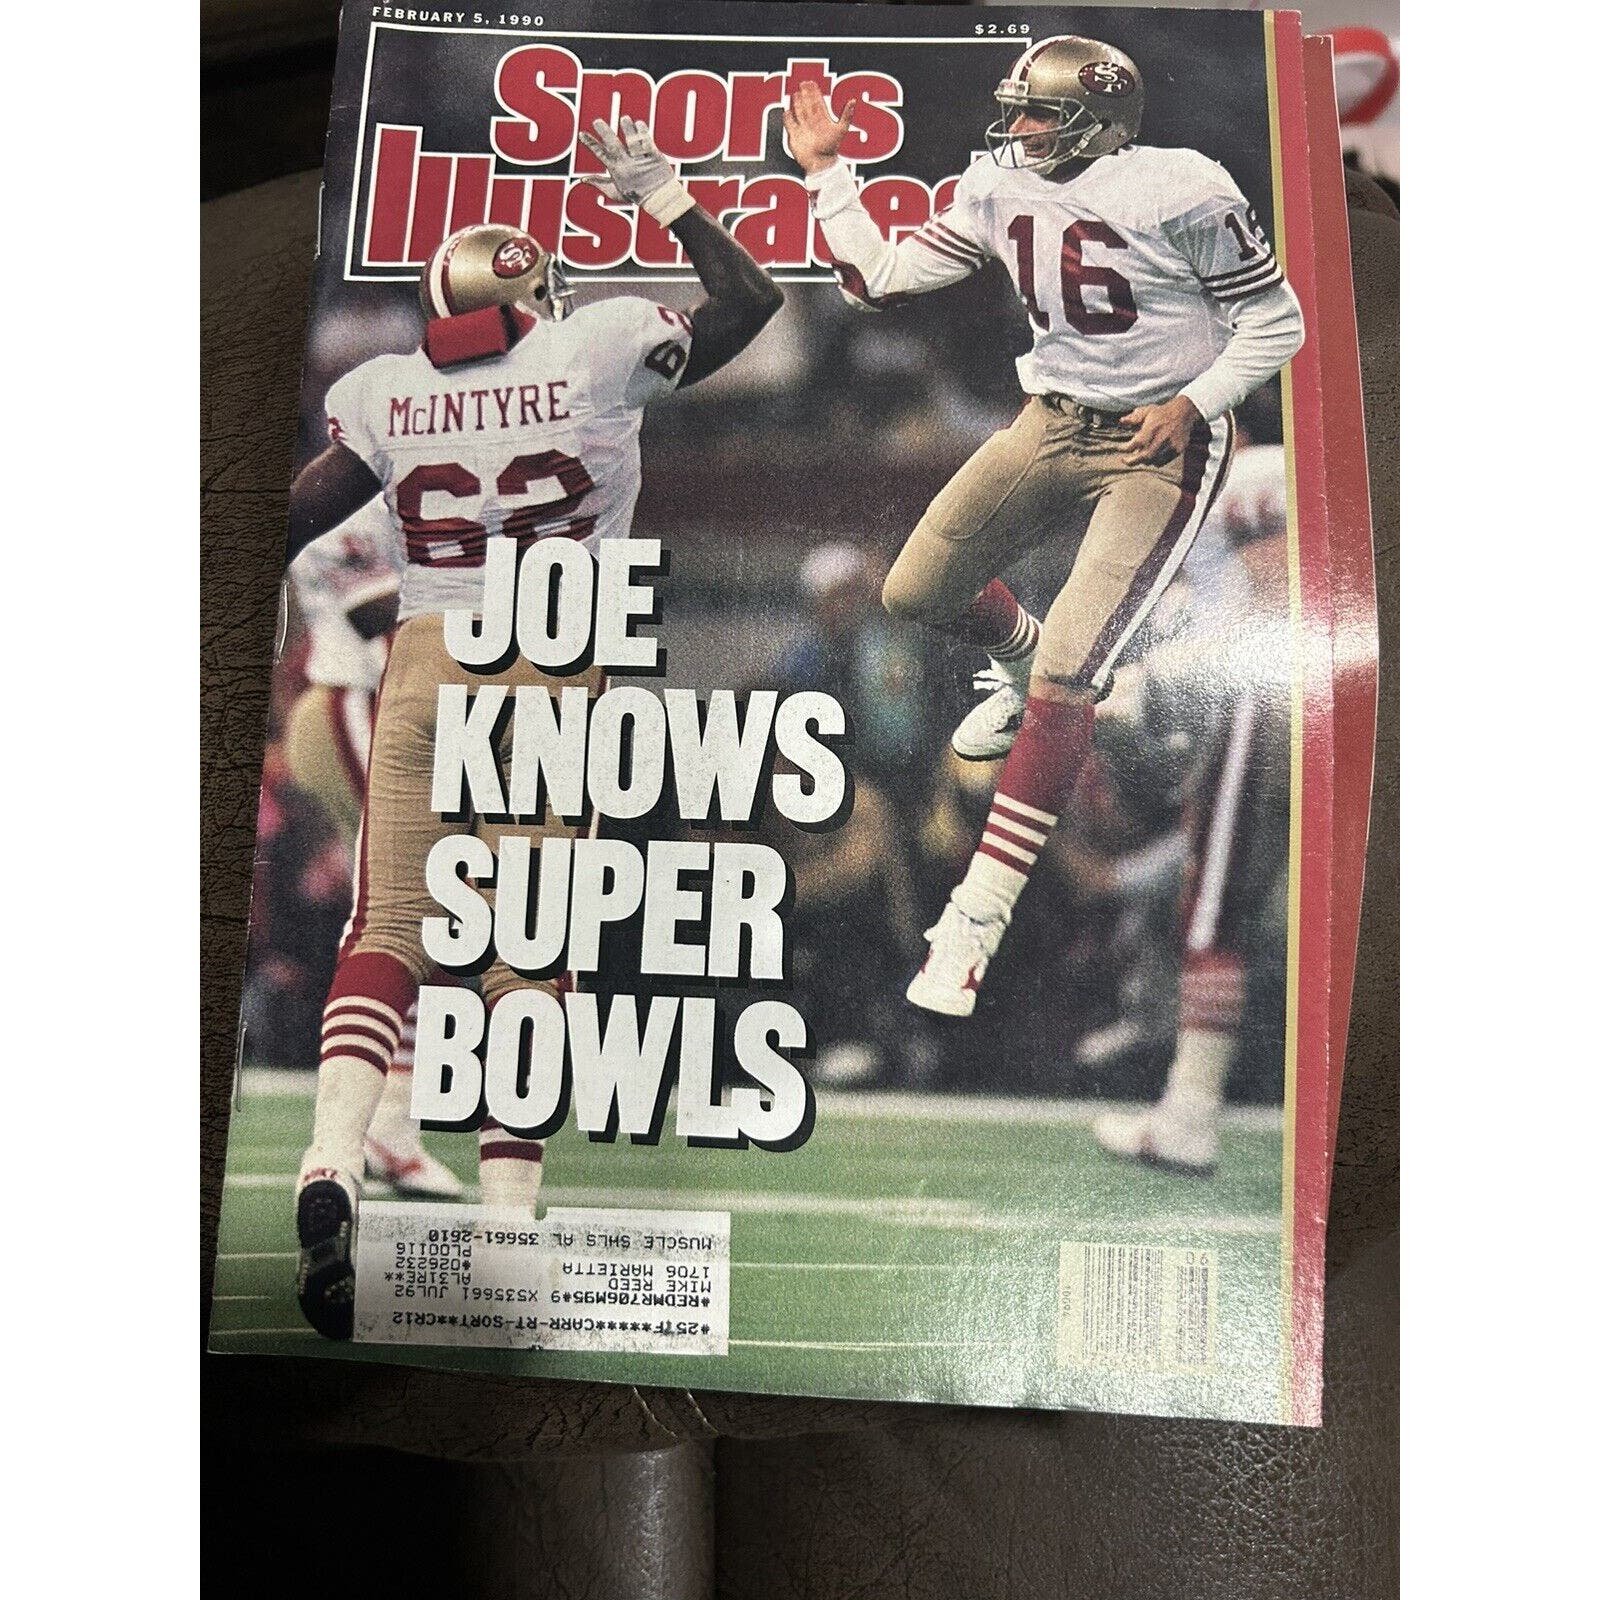 1990 February 5 Sports Illustrated Magazine, Joe Knows Super Bowls G9dfugljN